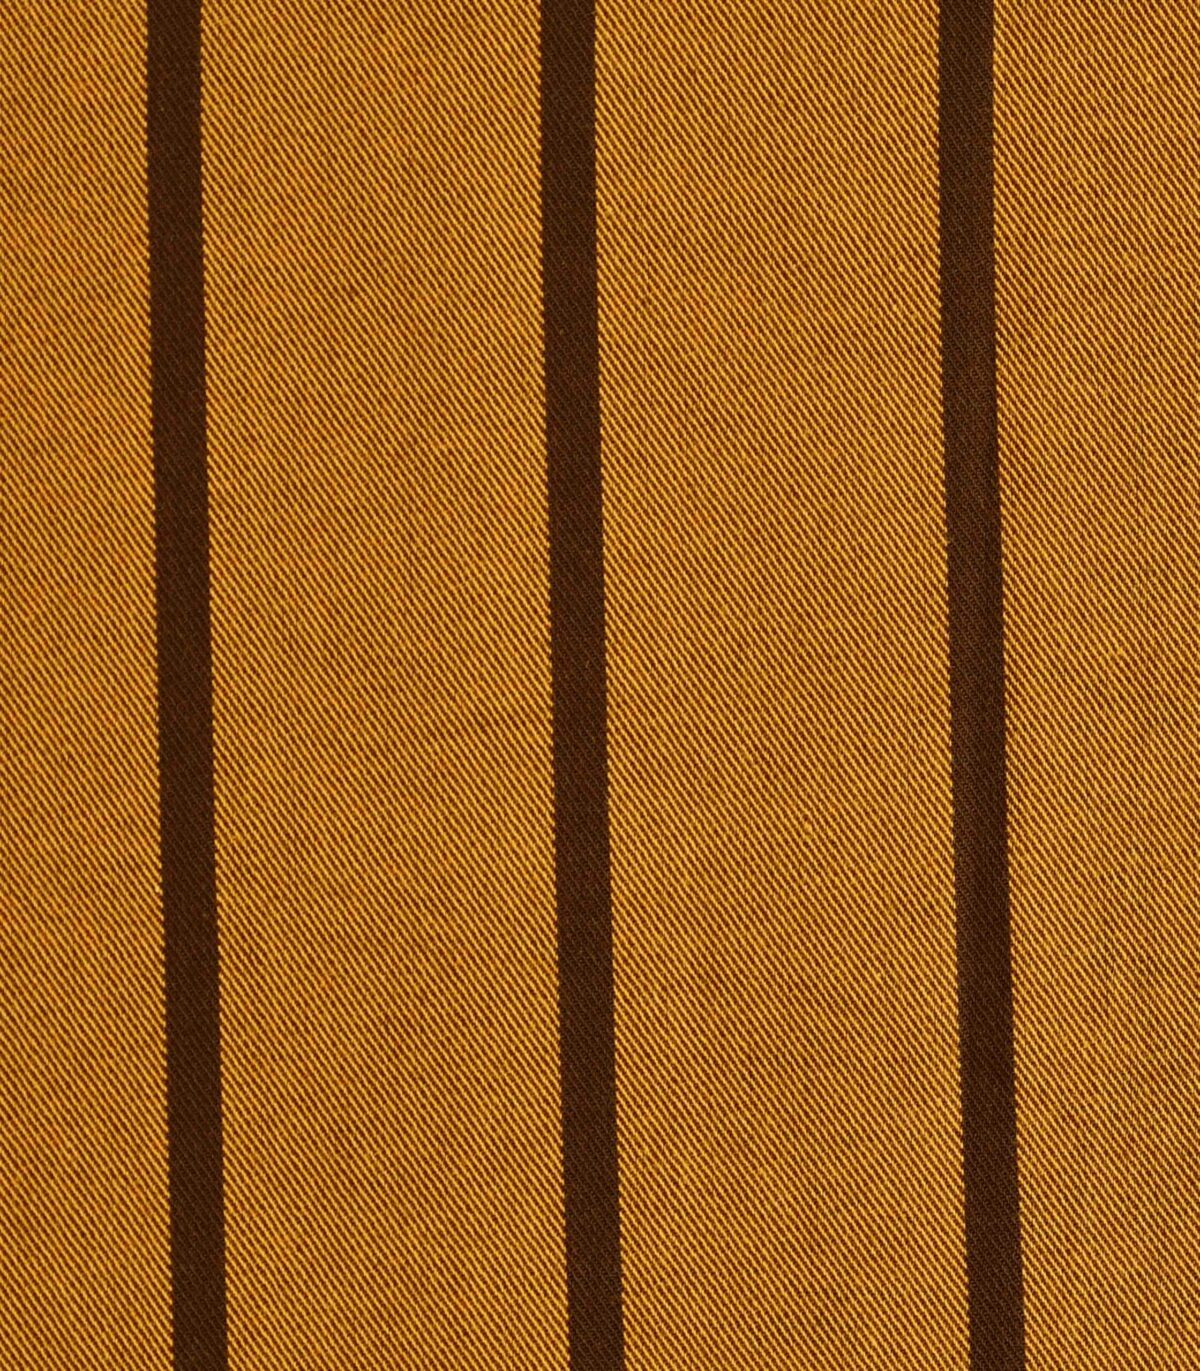 Cotton Black Stripe Yarn Dyed Fabric